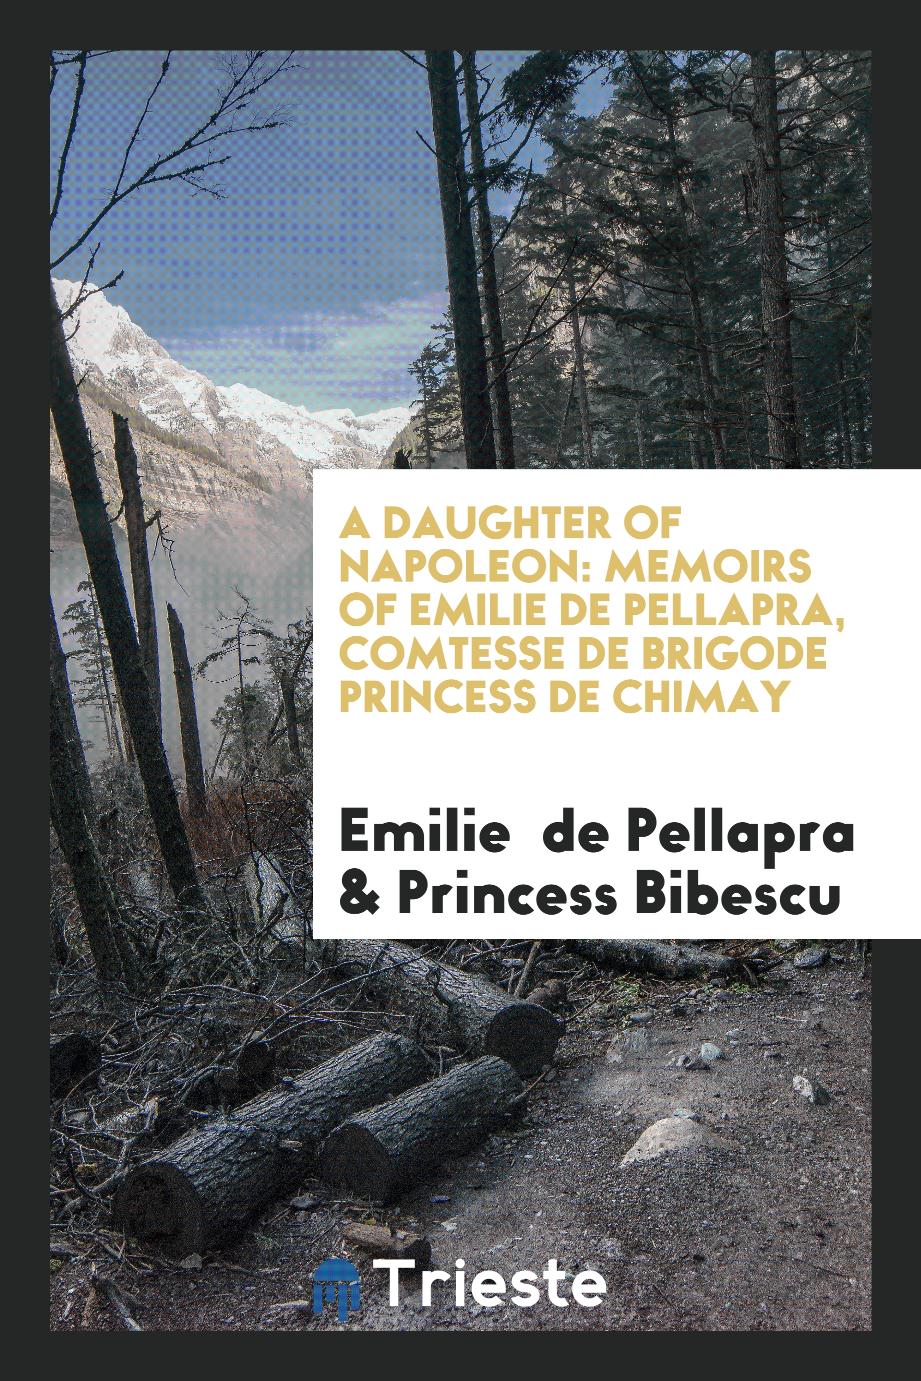 A Daughter of Napoleon: Memoirs of Emilie de Pellapra, Comtesse de Brigode Princess de Chimay